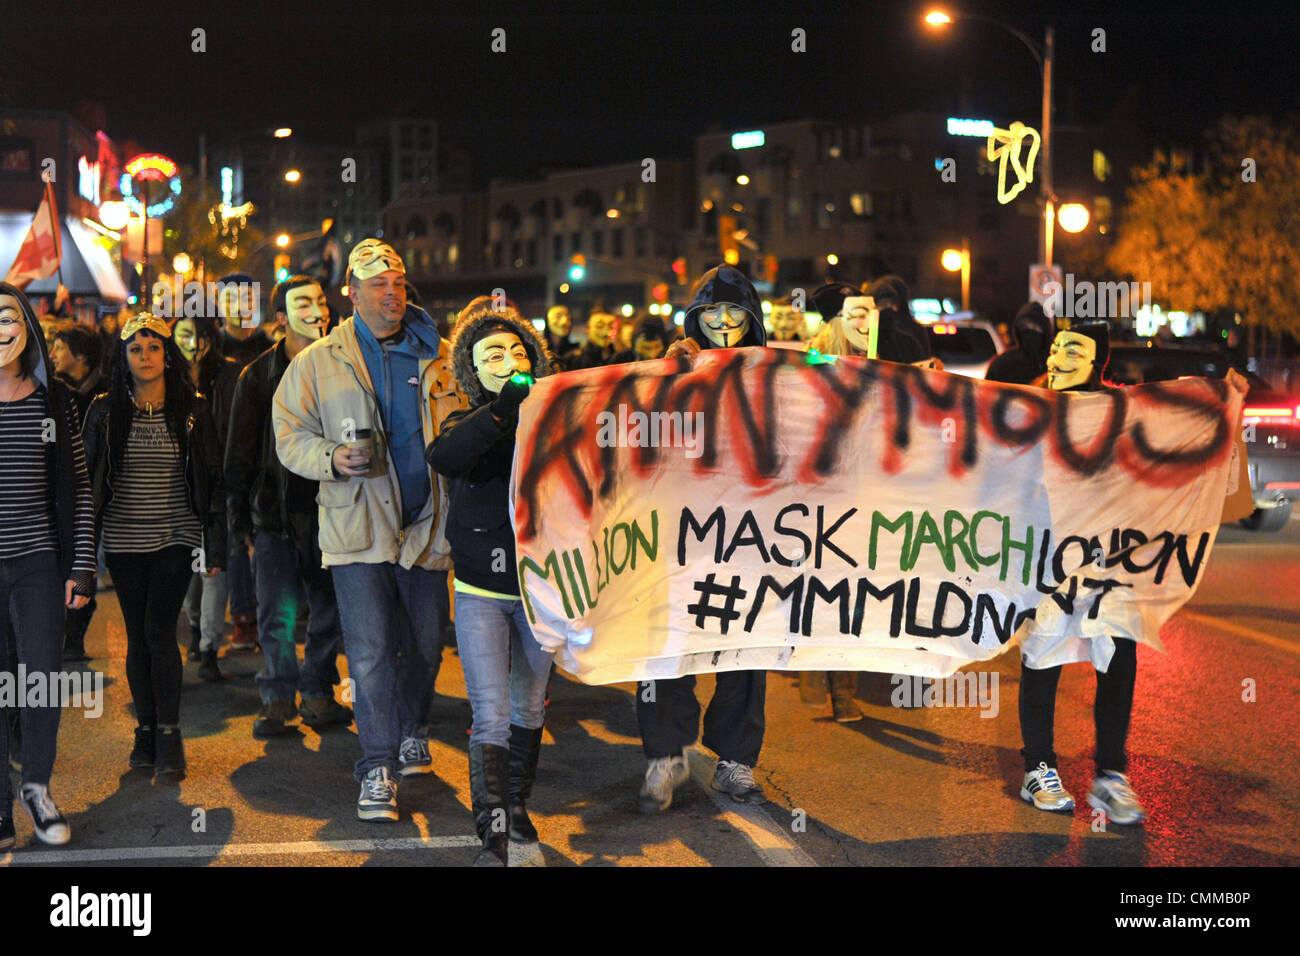 Les millions d'anonymes mars masque tenue le Bonfire Night in London, Ontario, Canada. Banque D'Images